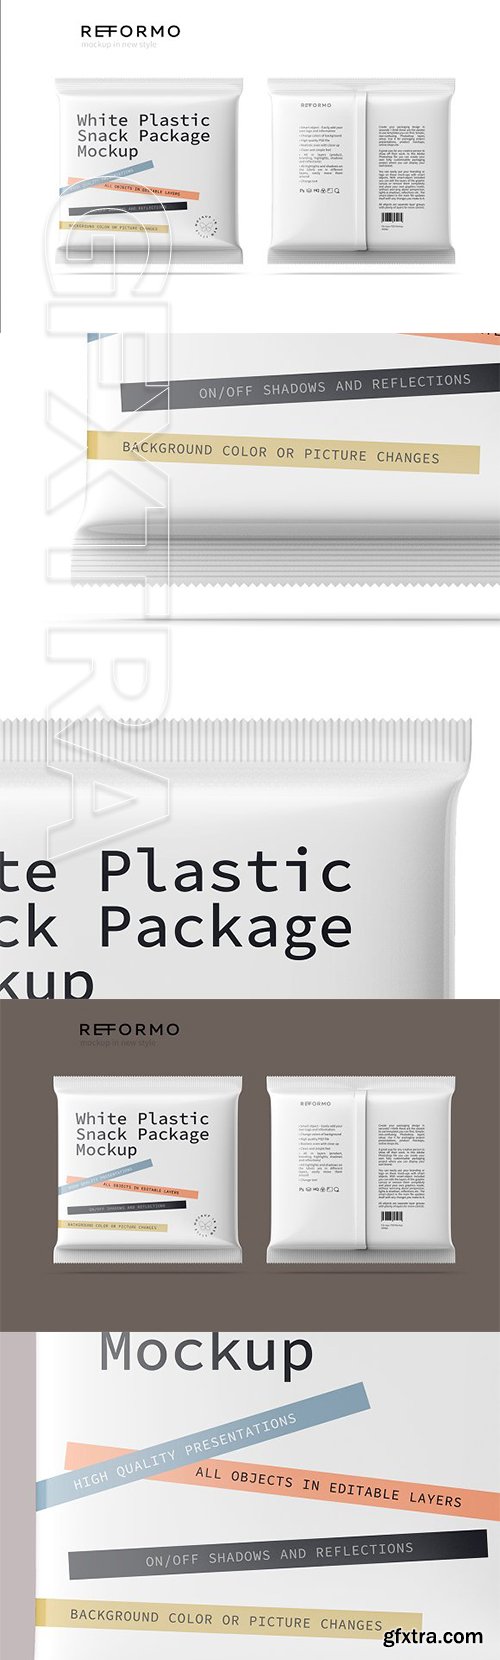 CreativeMarket - White Plastic Snack Package Mockup 3230012